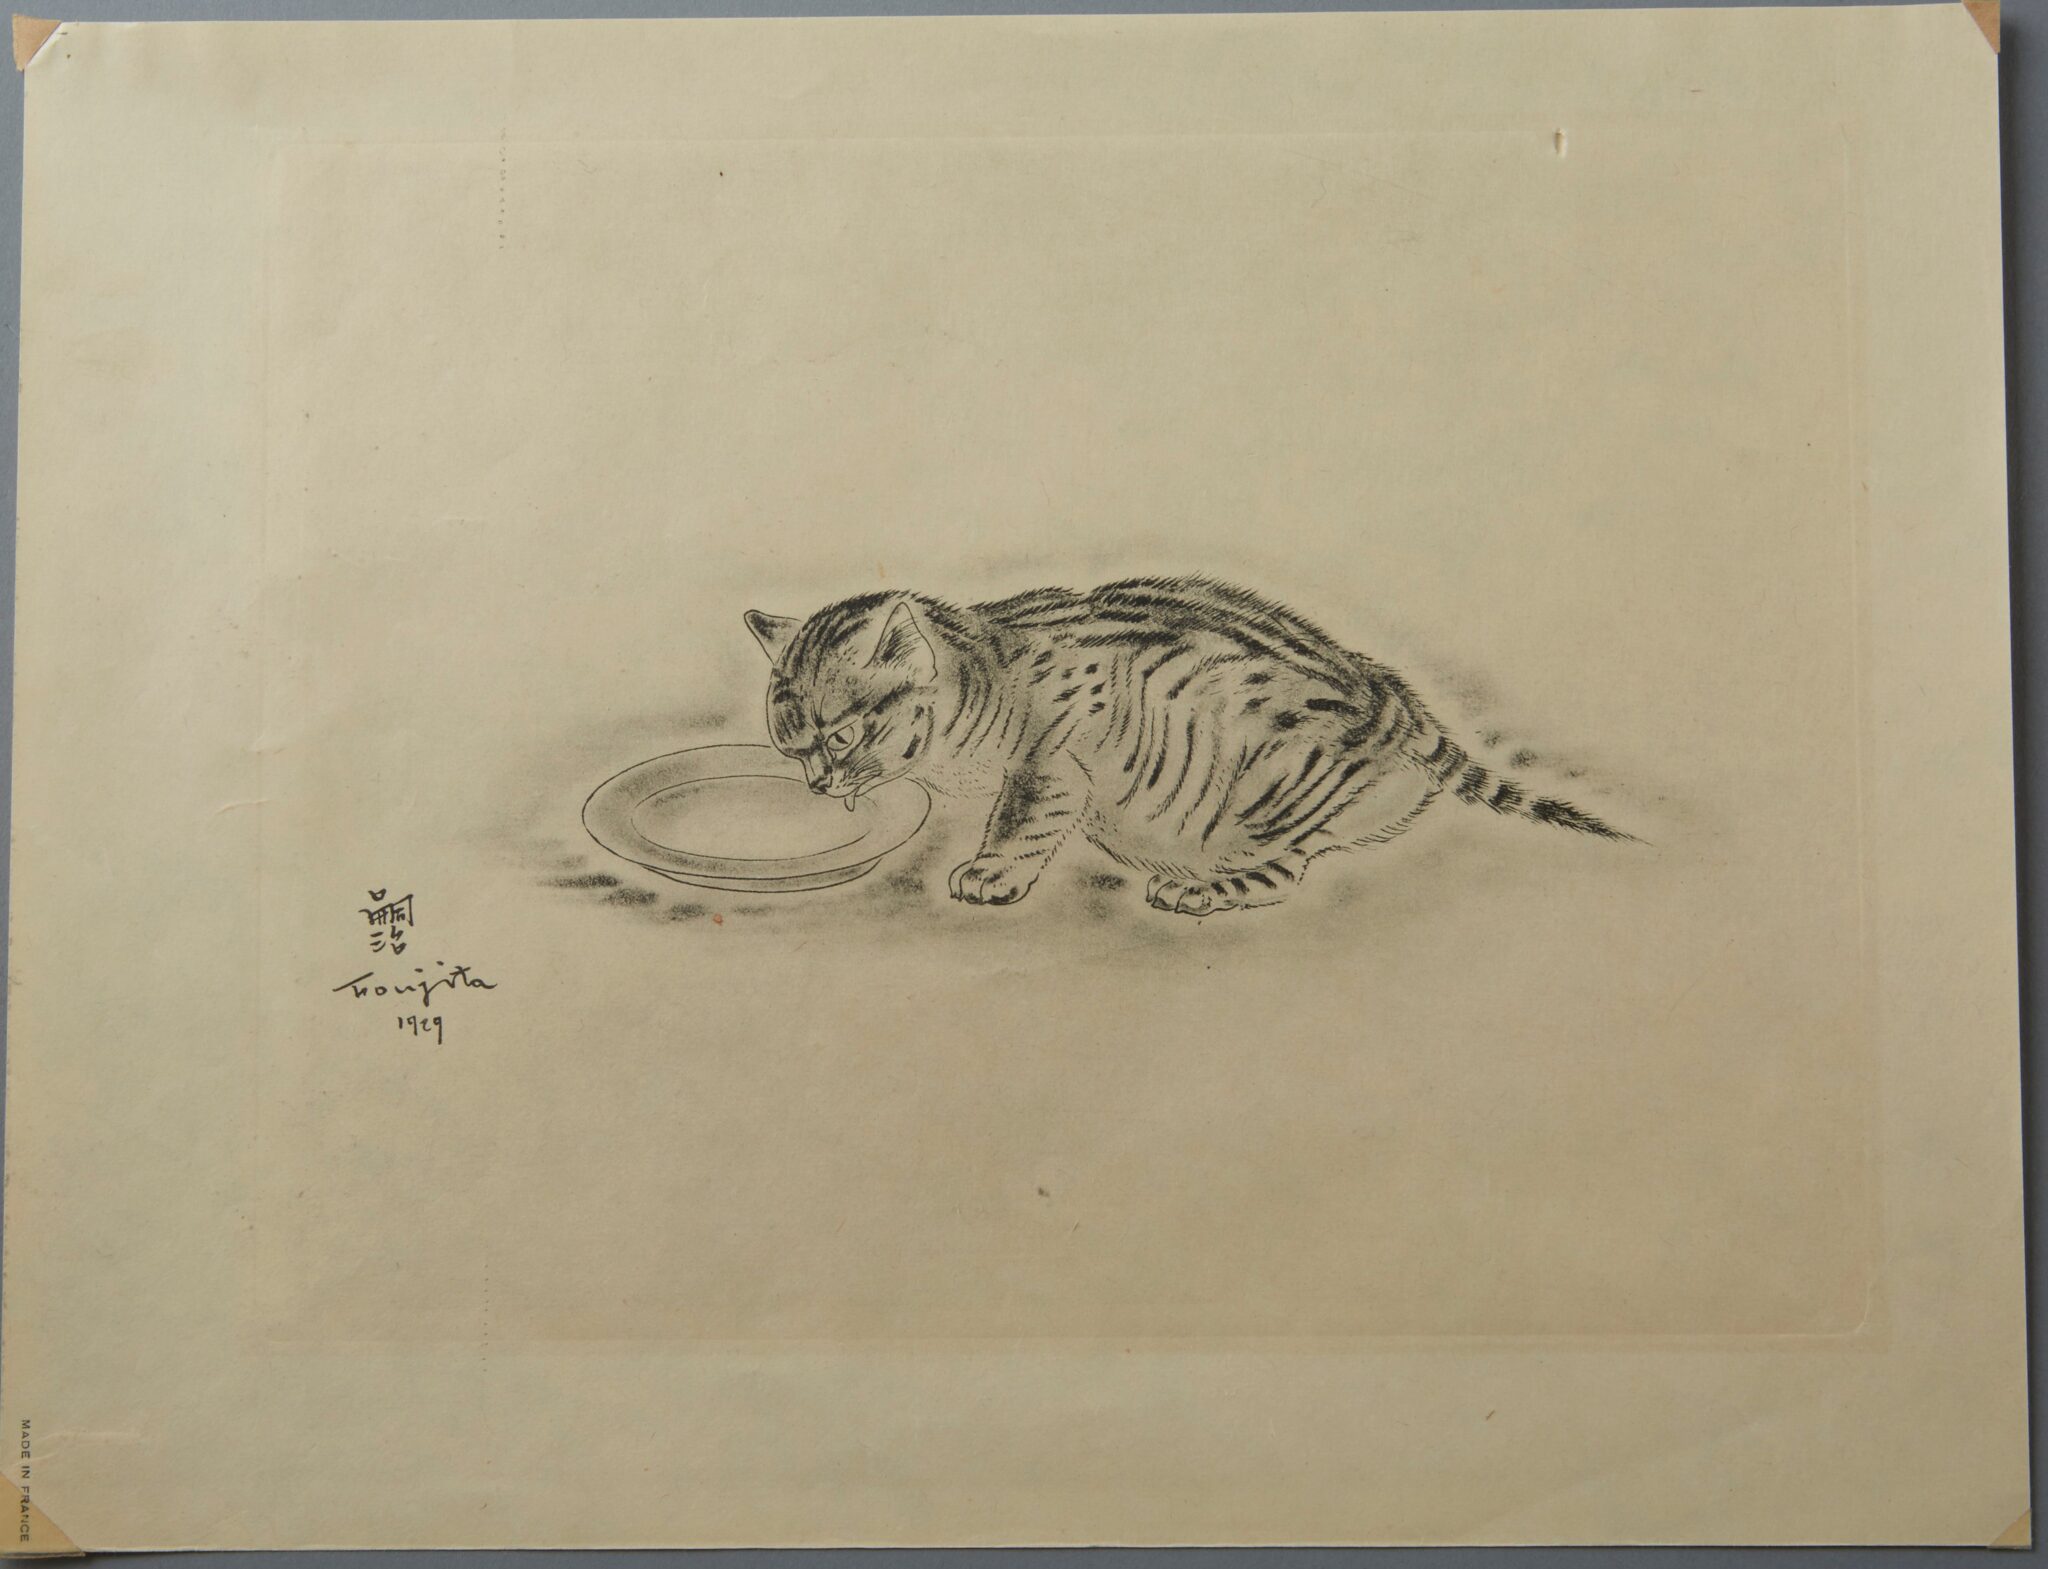 Leonard Tsuguharu Foujita "A Book of Cats"